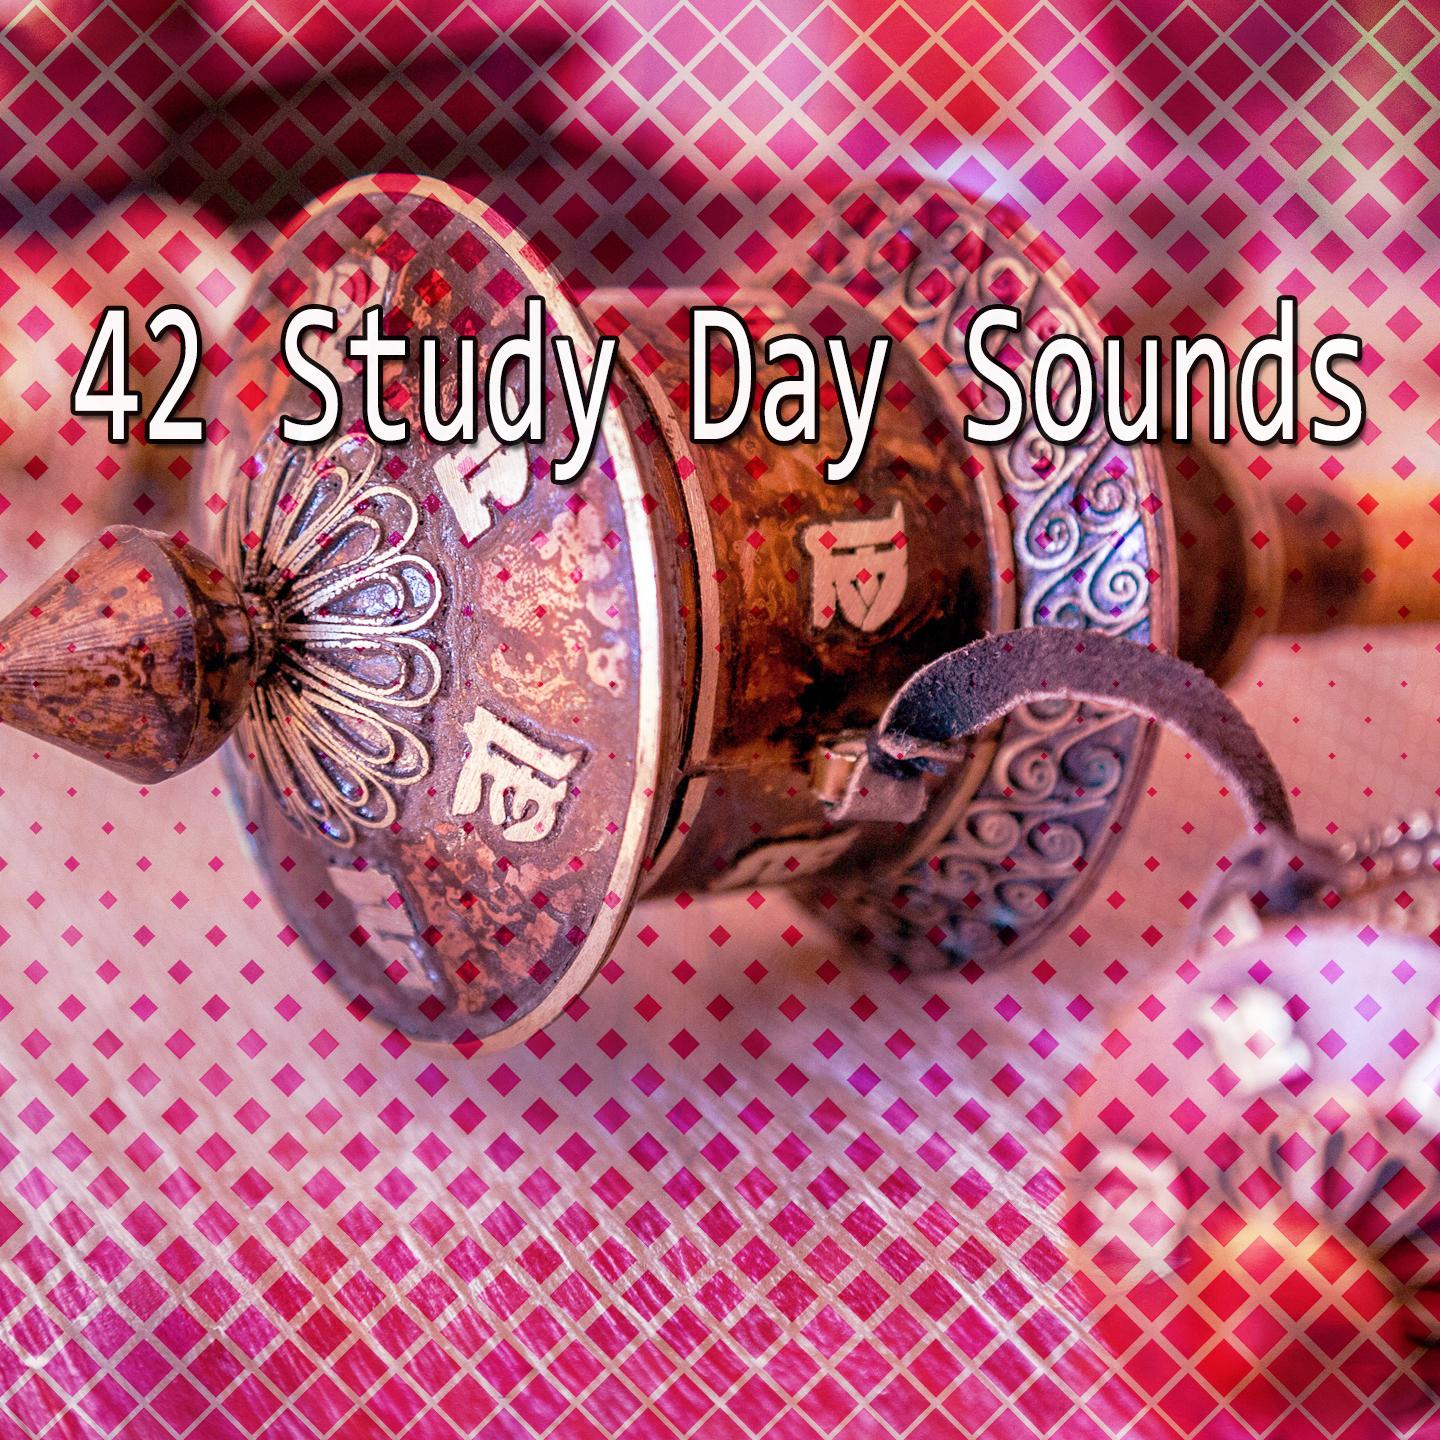 42 Study Day Sounds